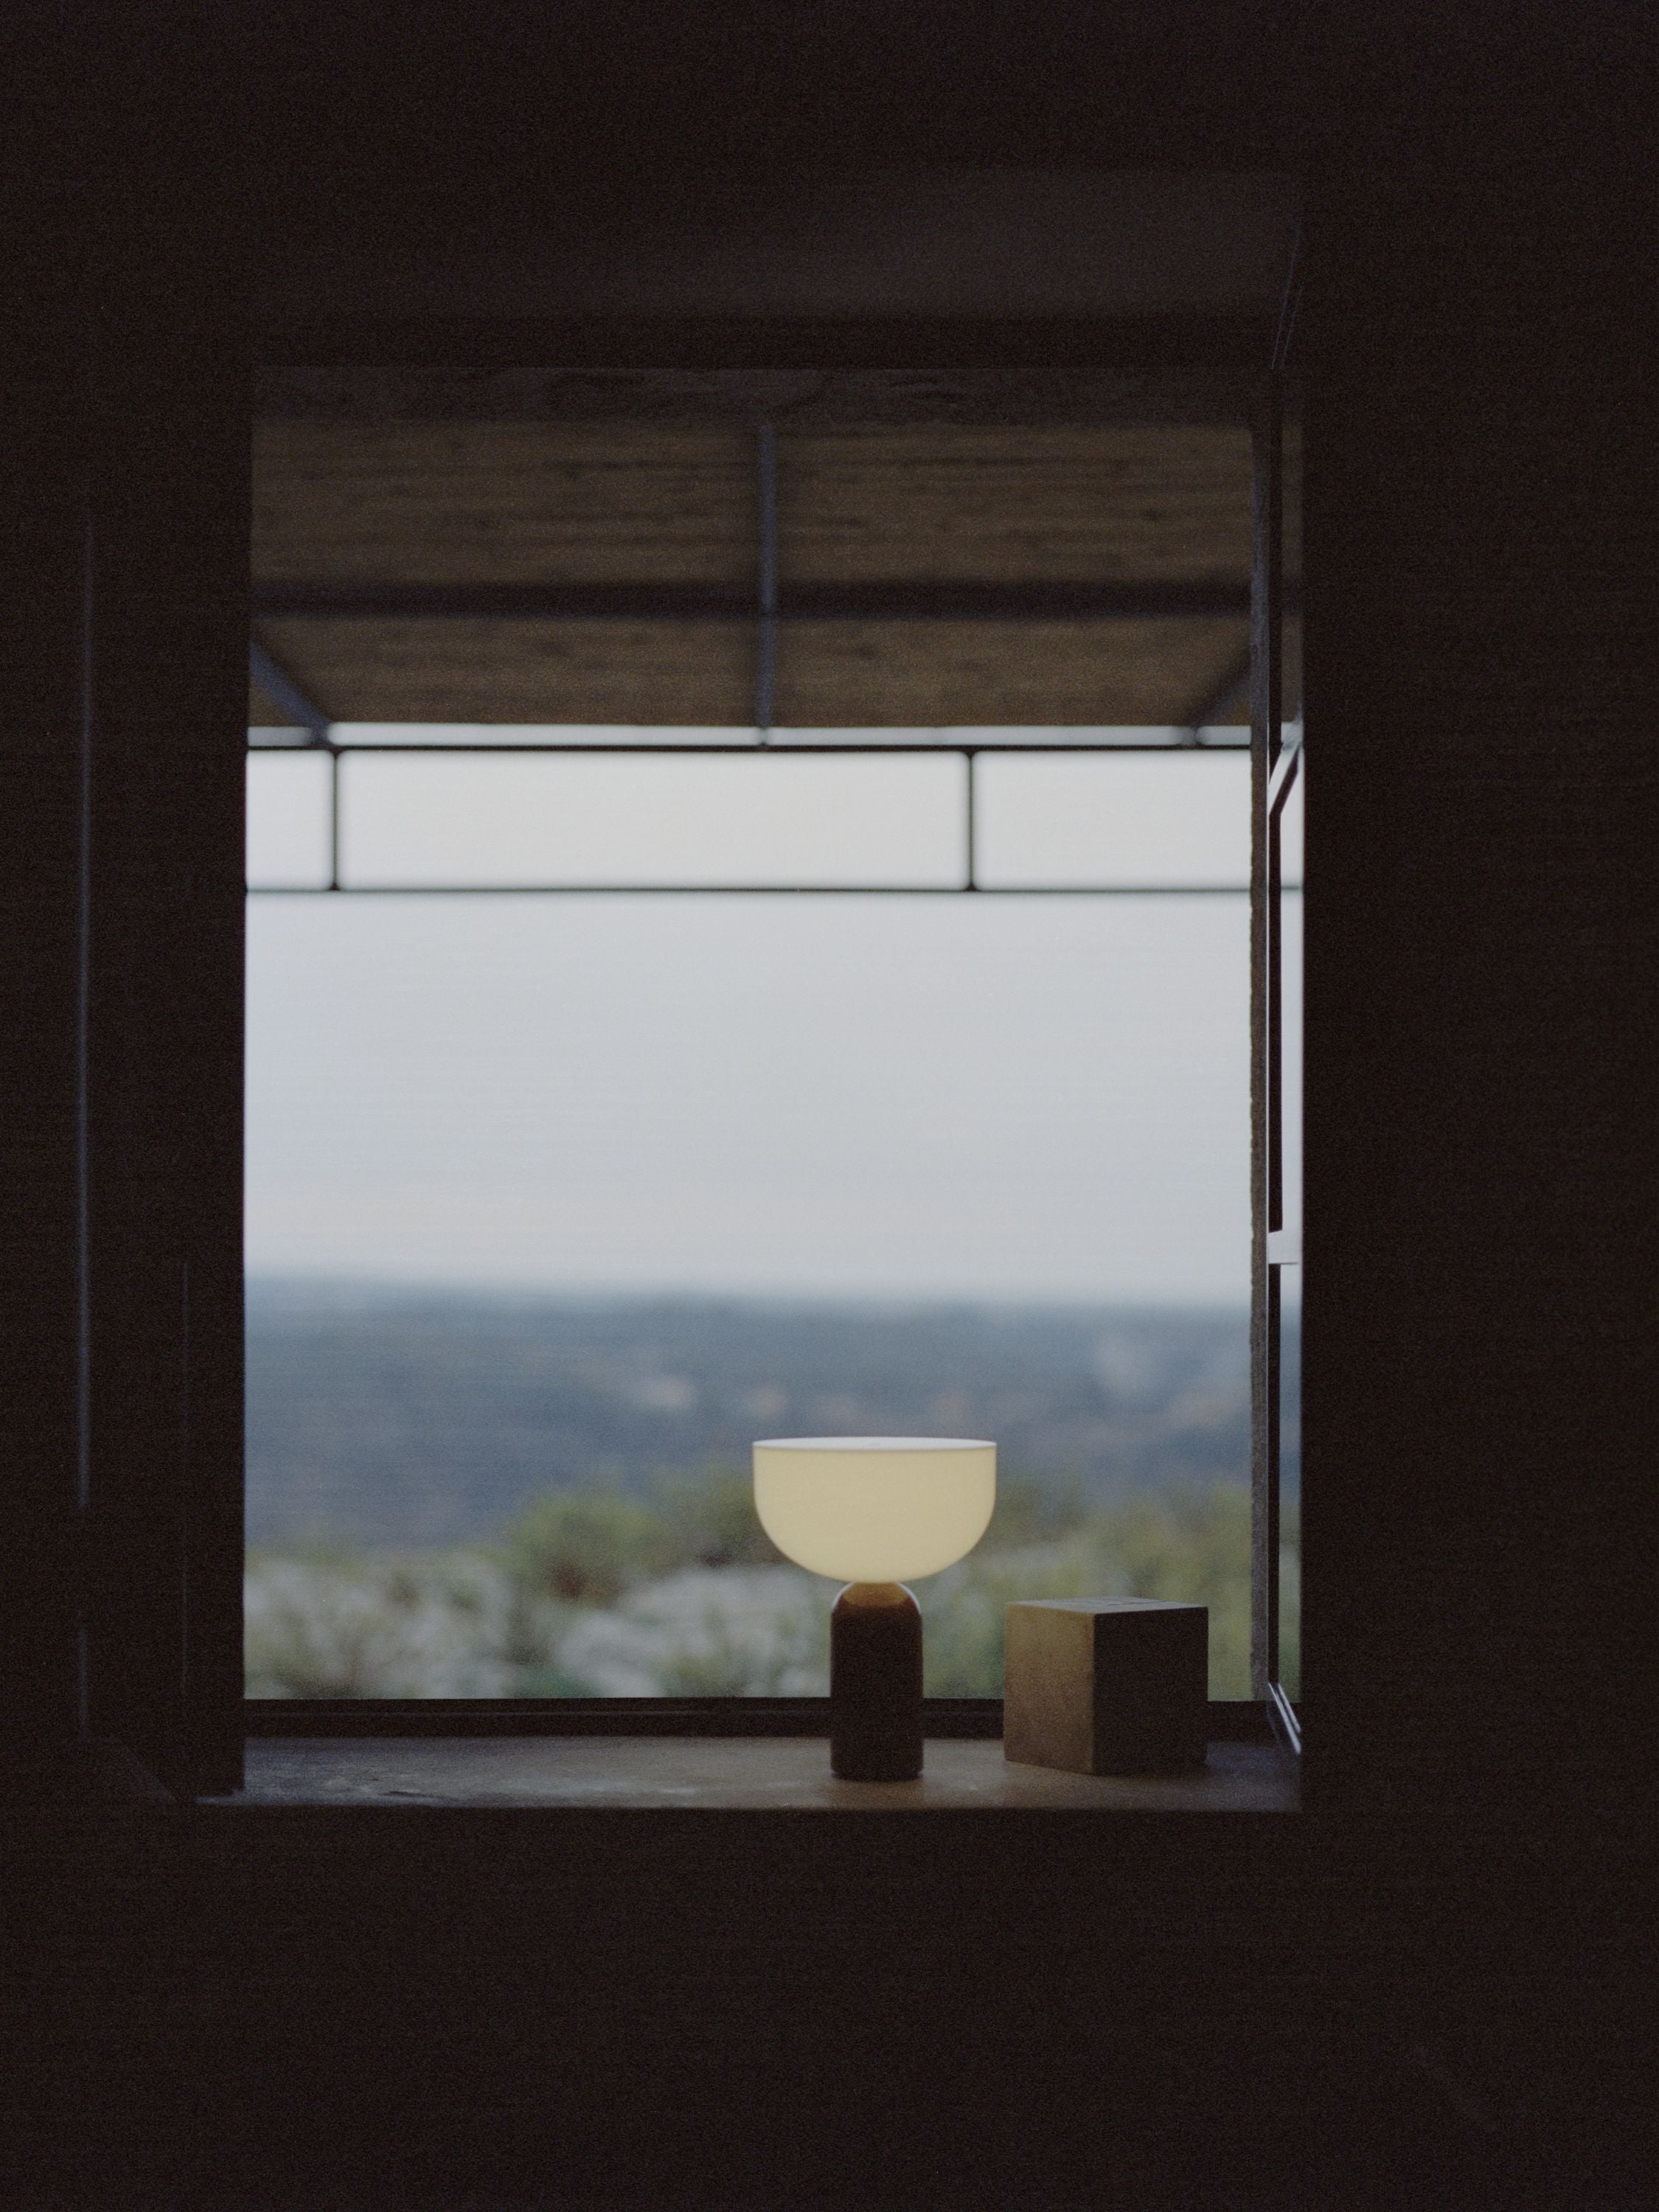 Lampe de table portable de nouvelles œuvres, Breccia Pernice